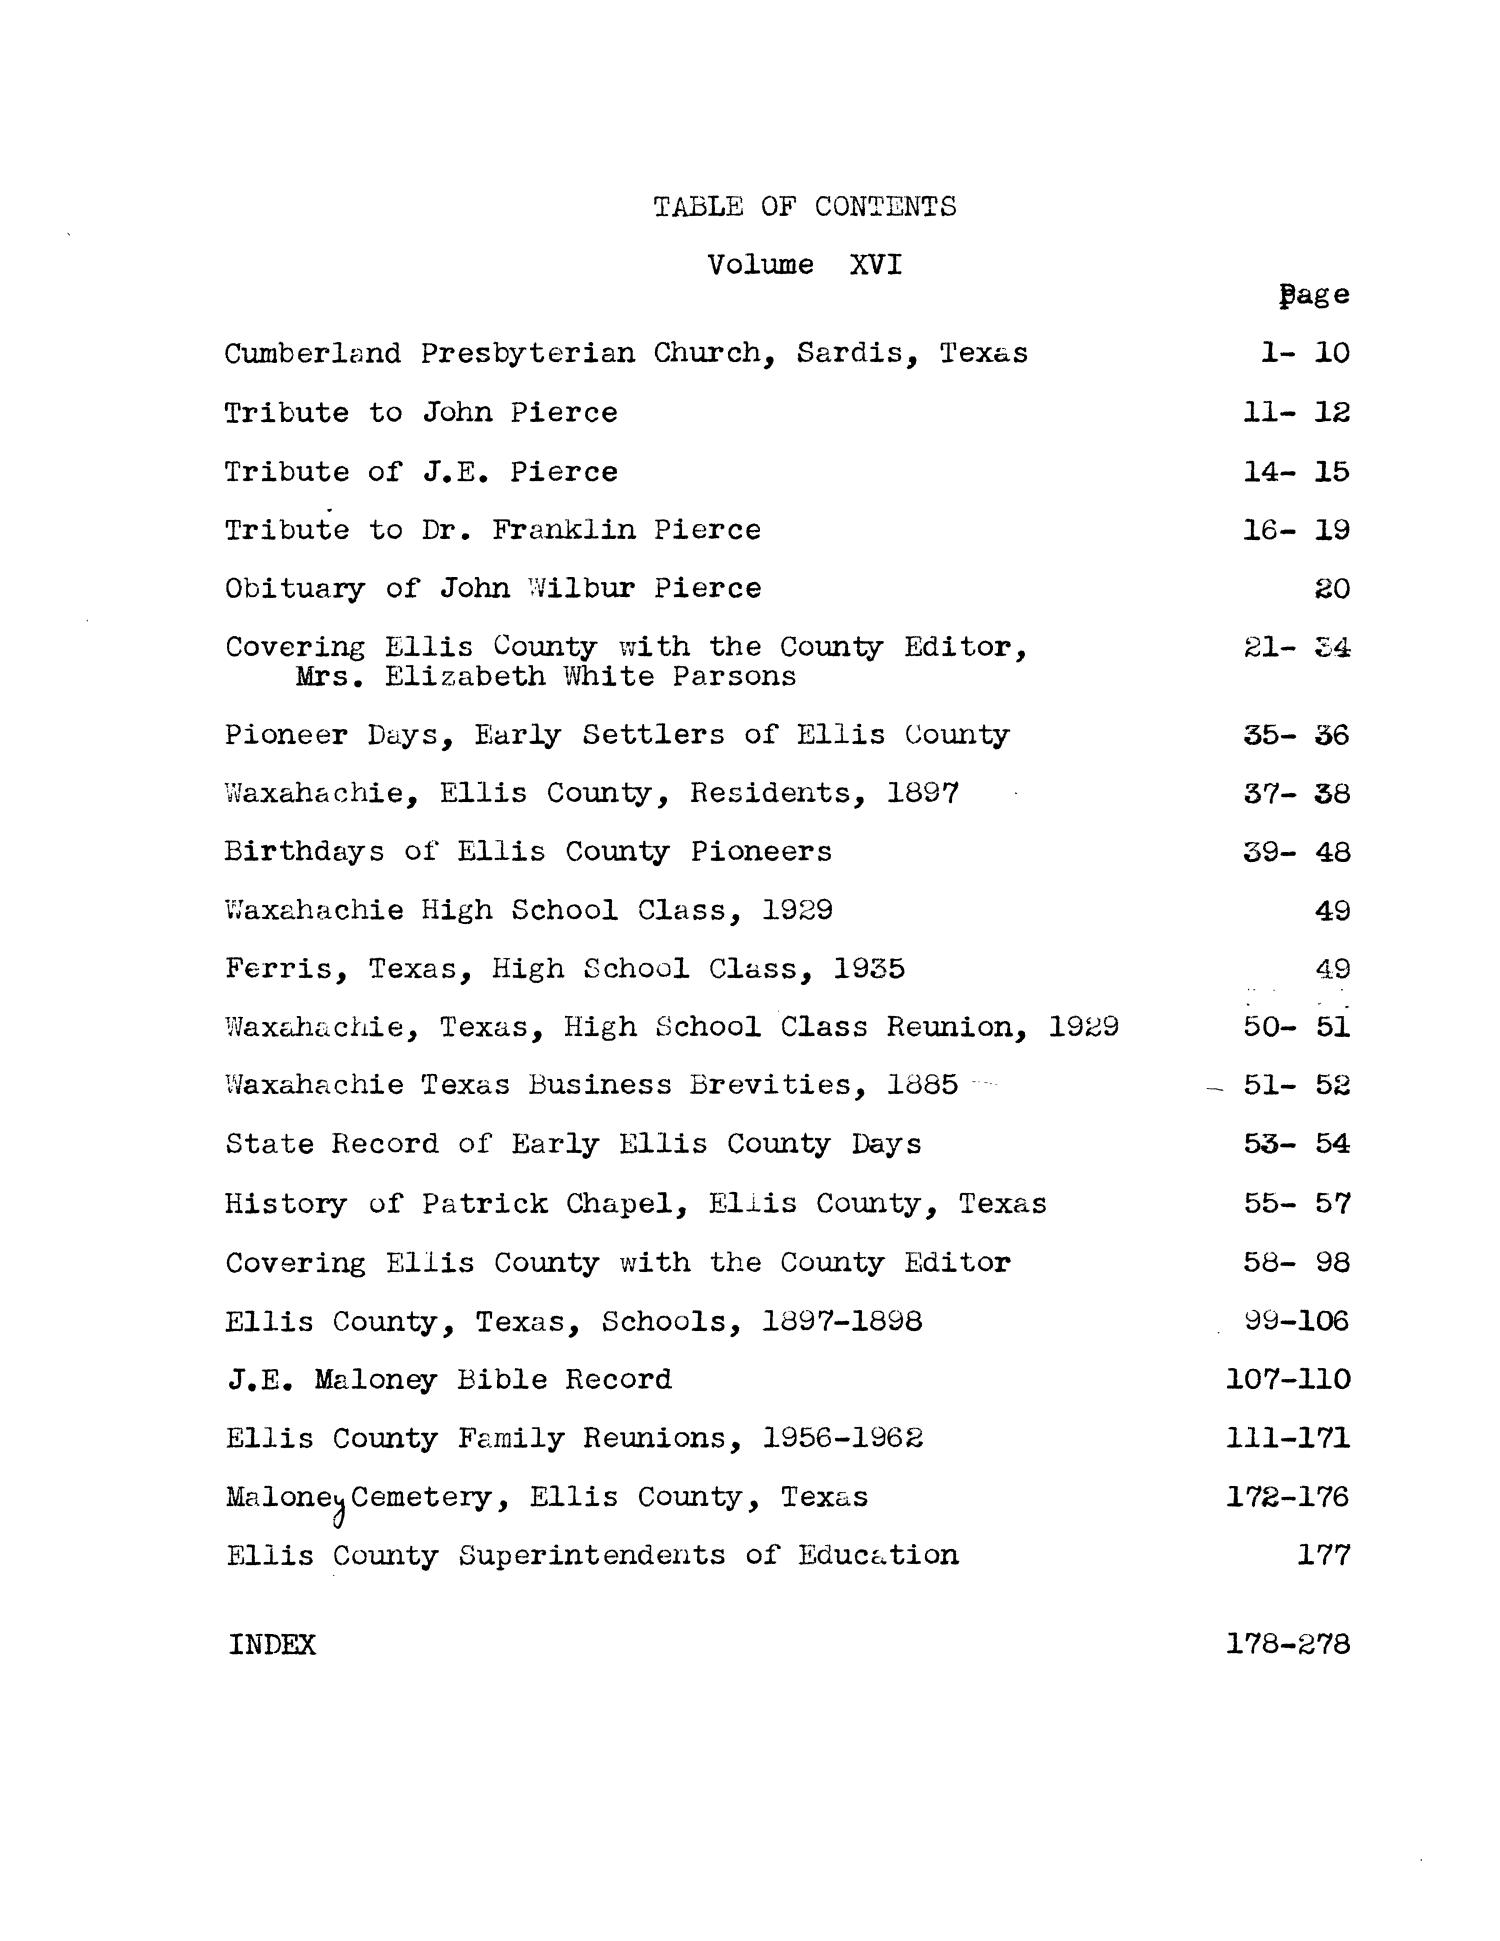 [Texas Genealogical Records, Ellis County: Index]
                                                
                                                    19
                                                